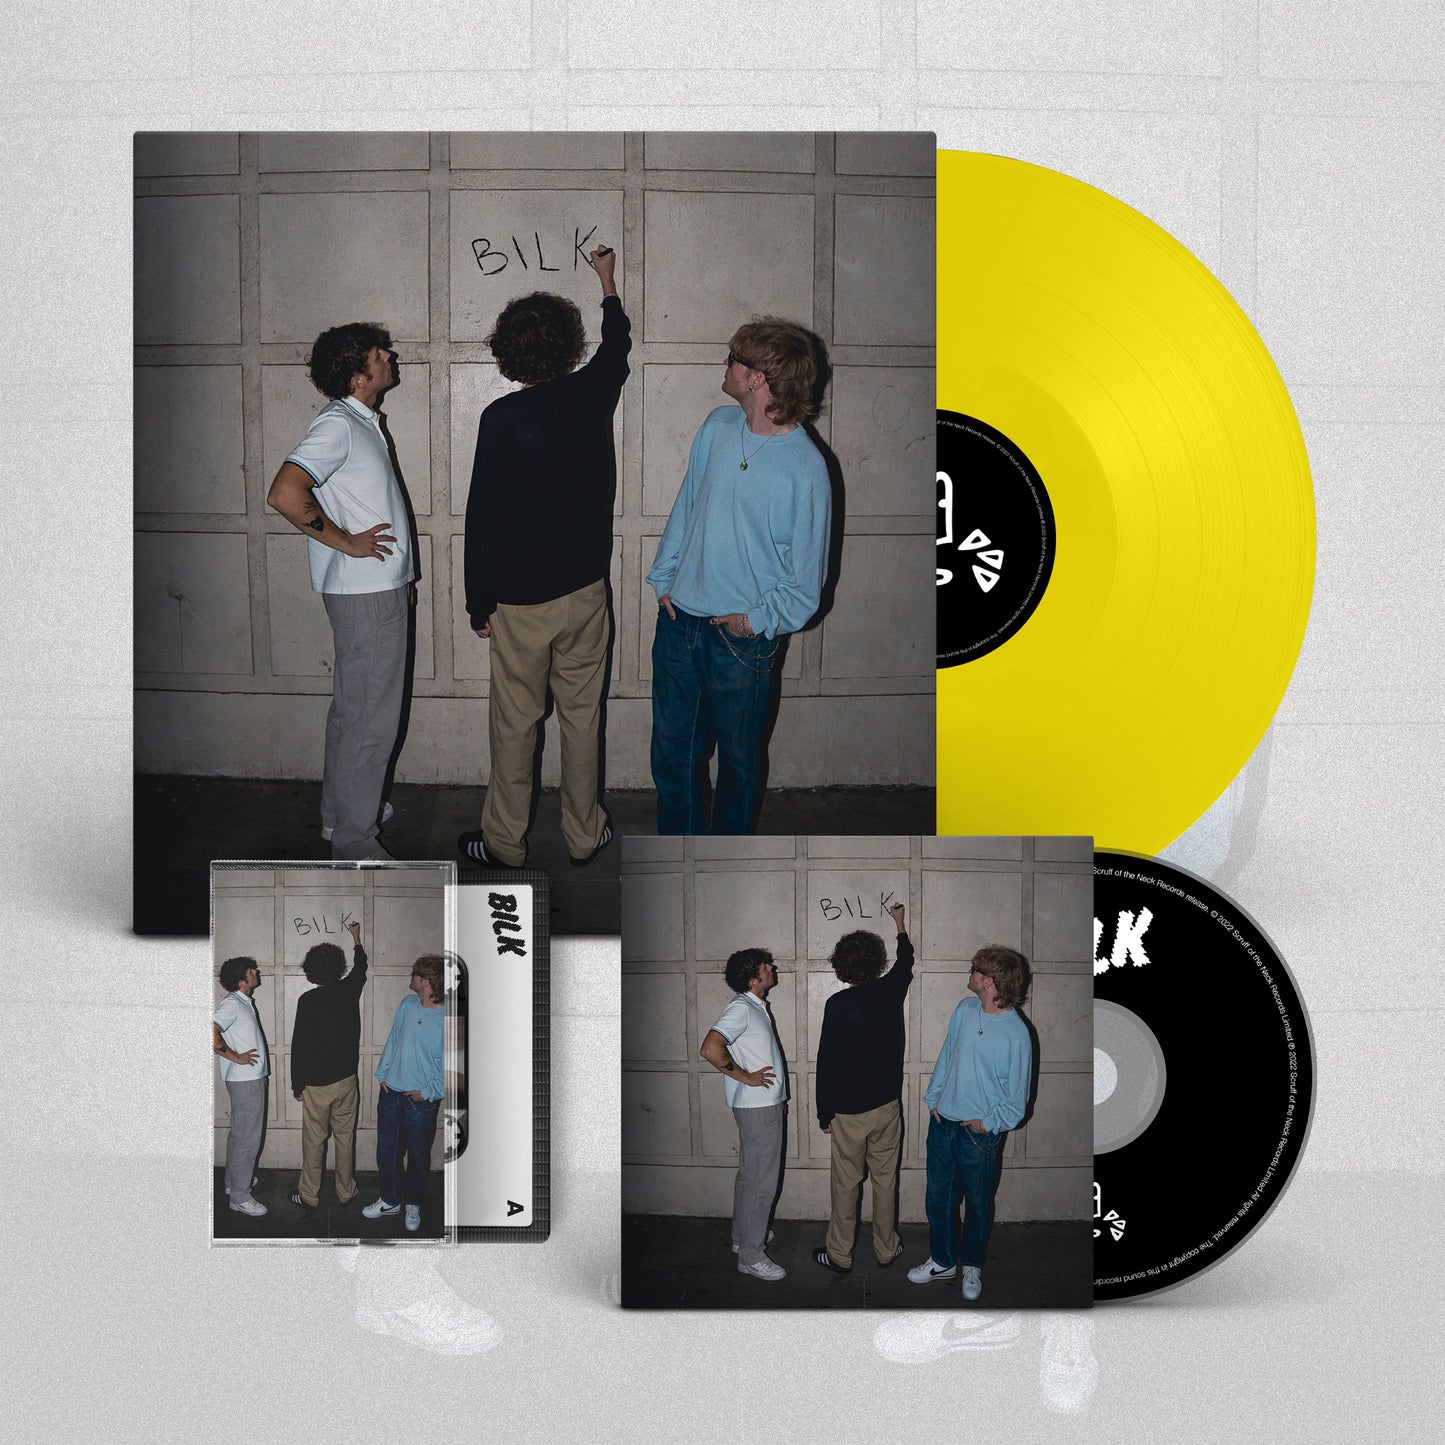 Bilk - 'Bilk' LP - Bundle - Limited Edition Yellow 12" Vinyl Disc + CD + Cassette